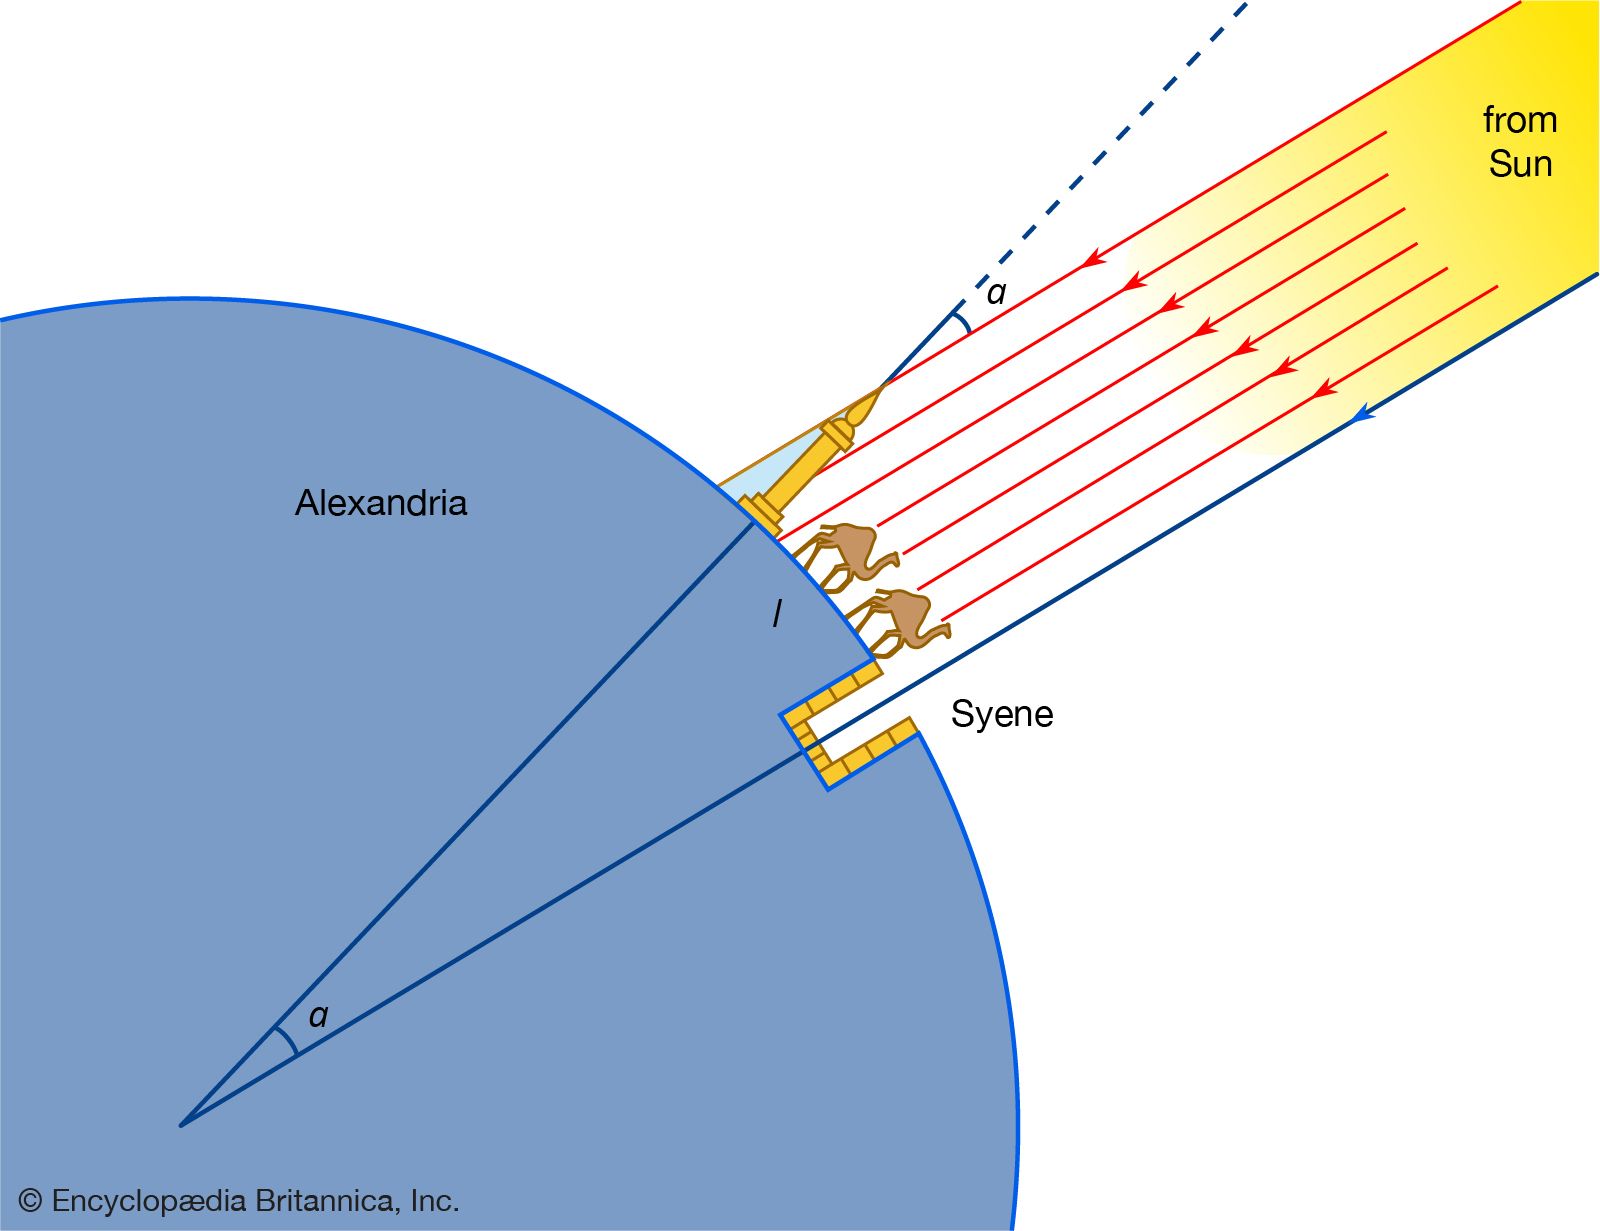 circumference-method-length-Eratosthenes-angle-Earth-arc.jpg